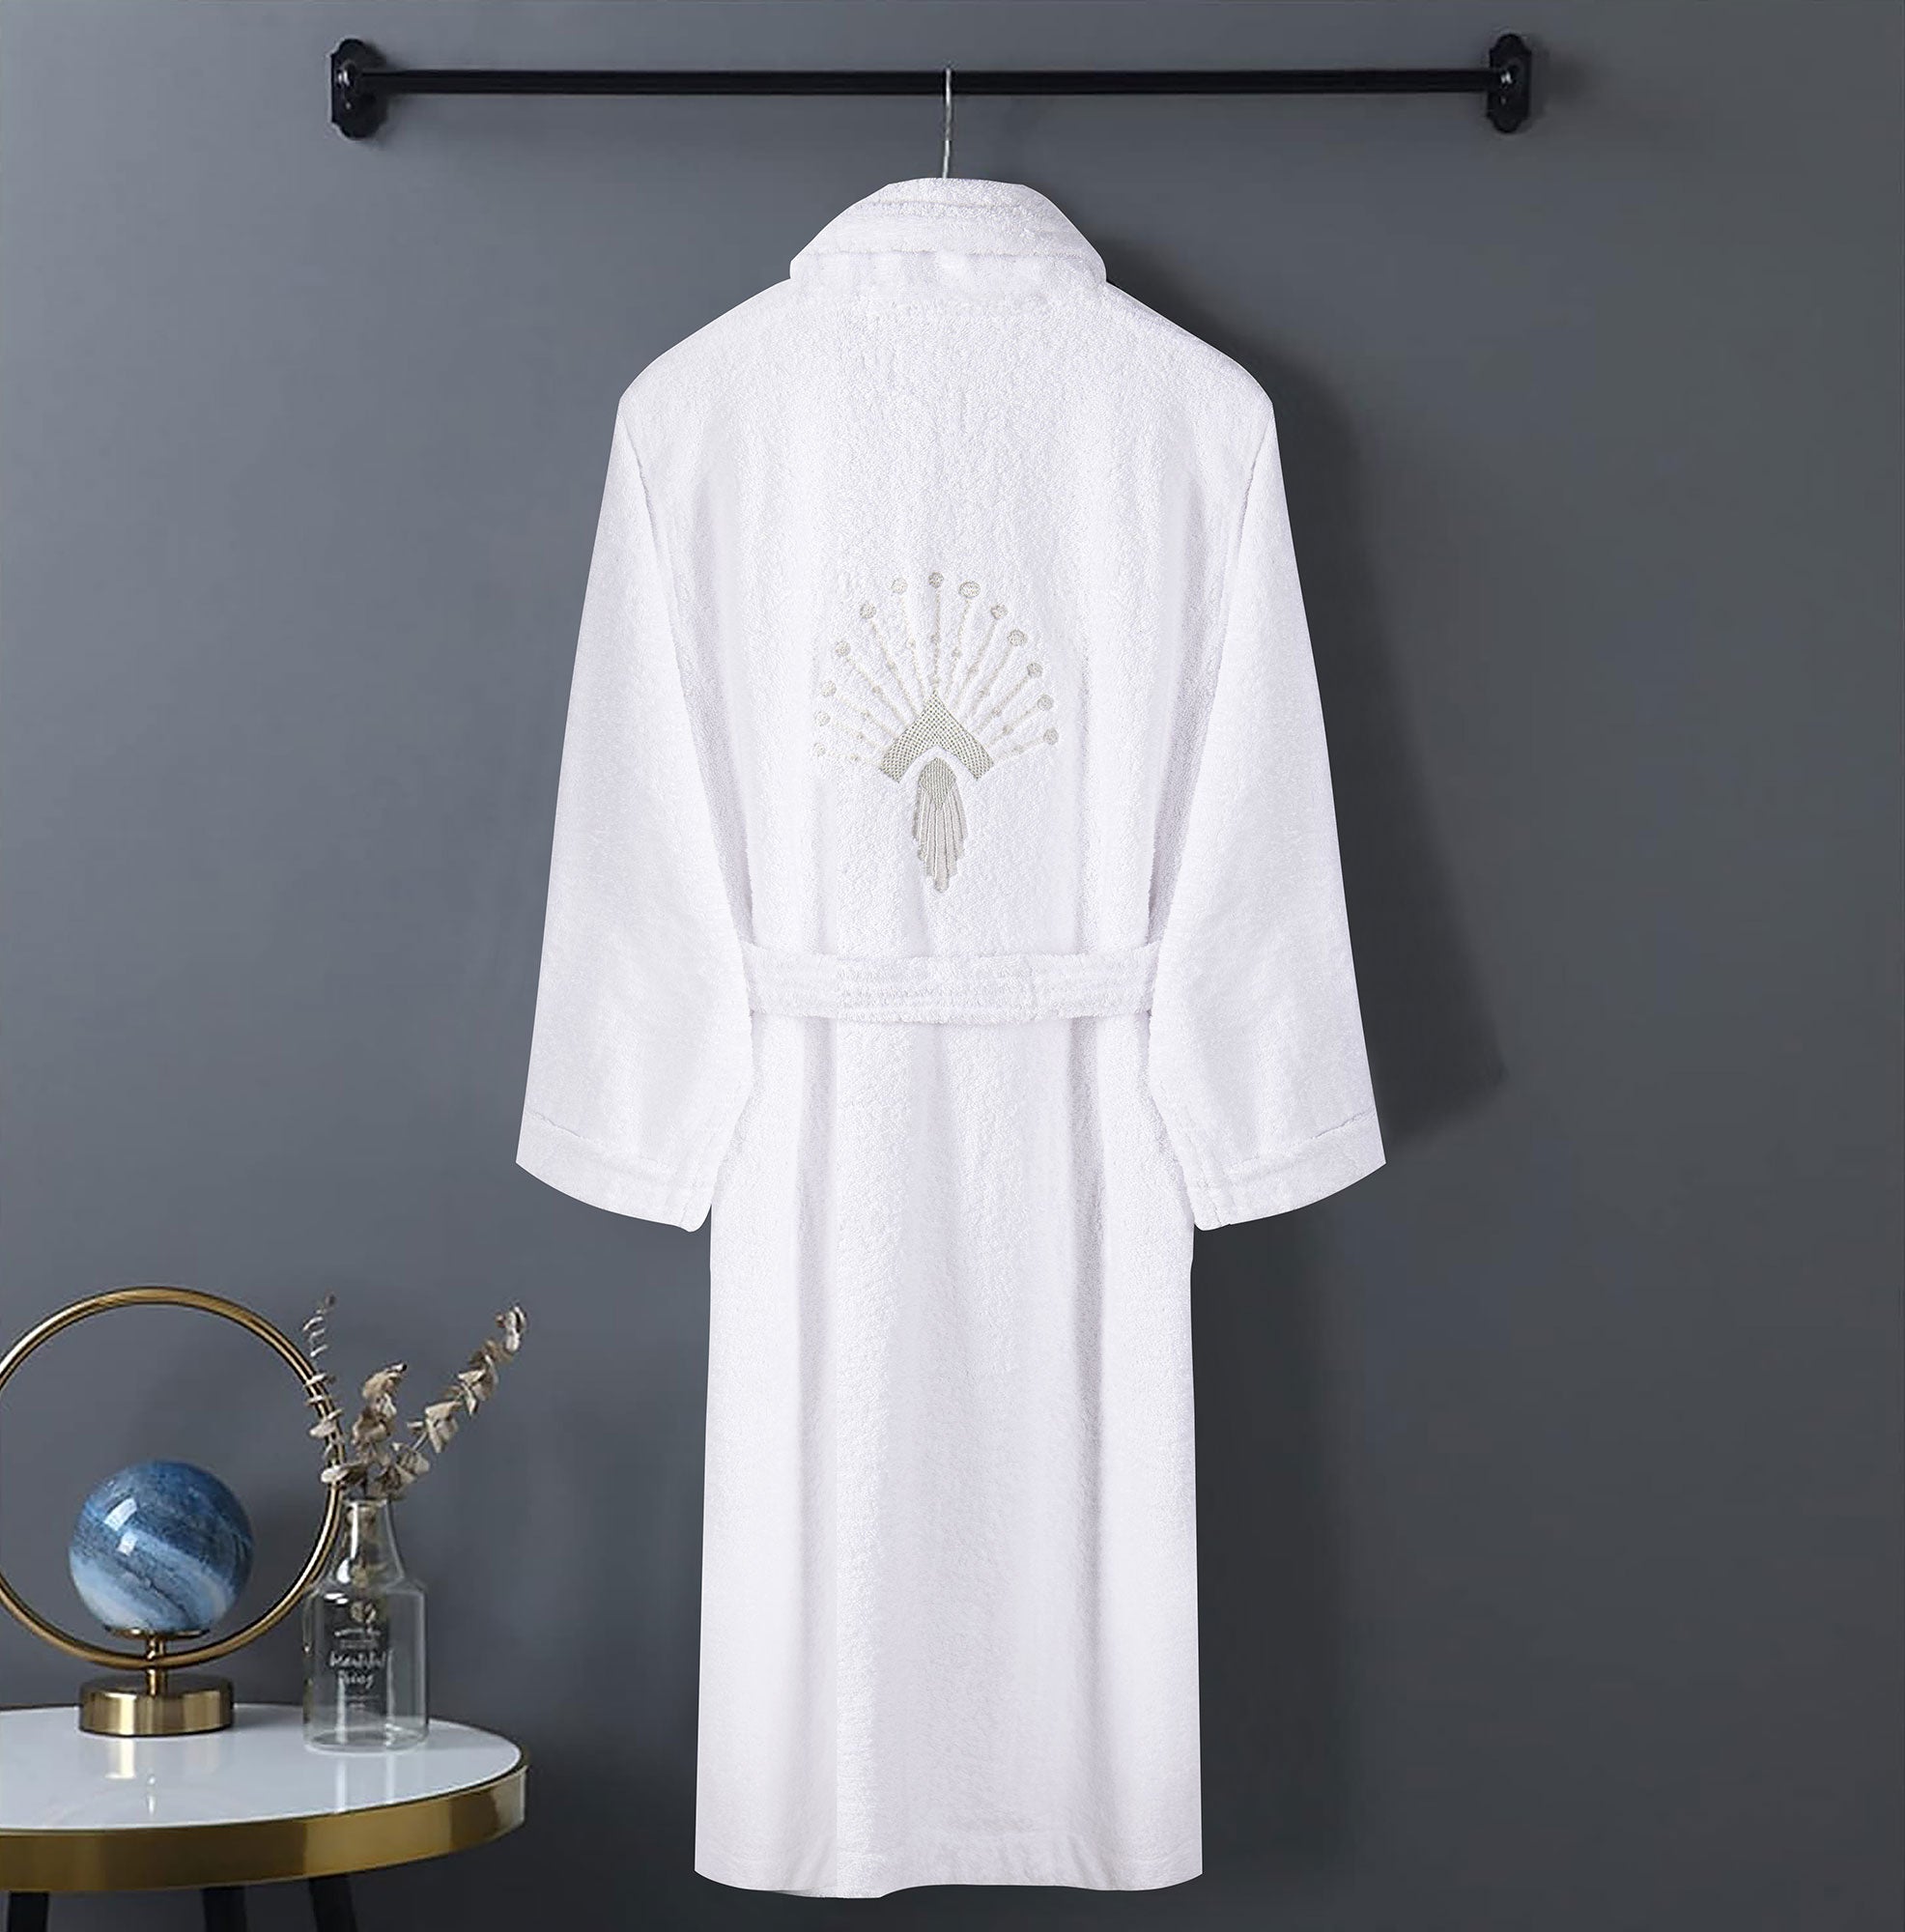 Eventai - Bath robe